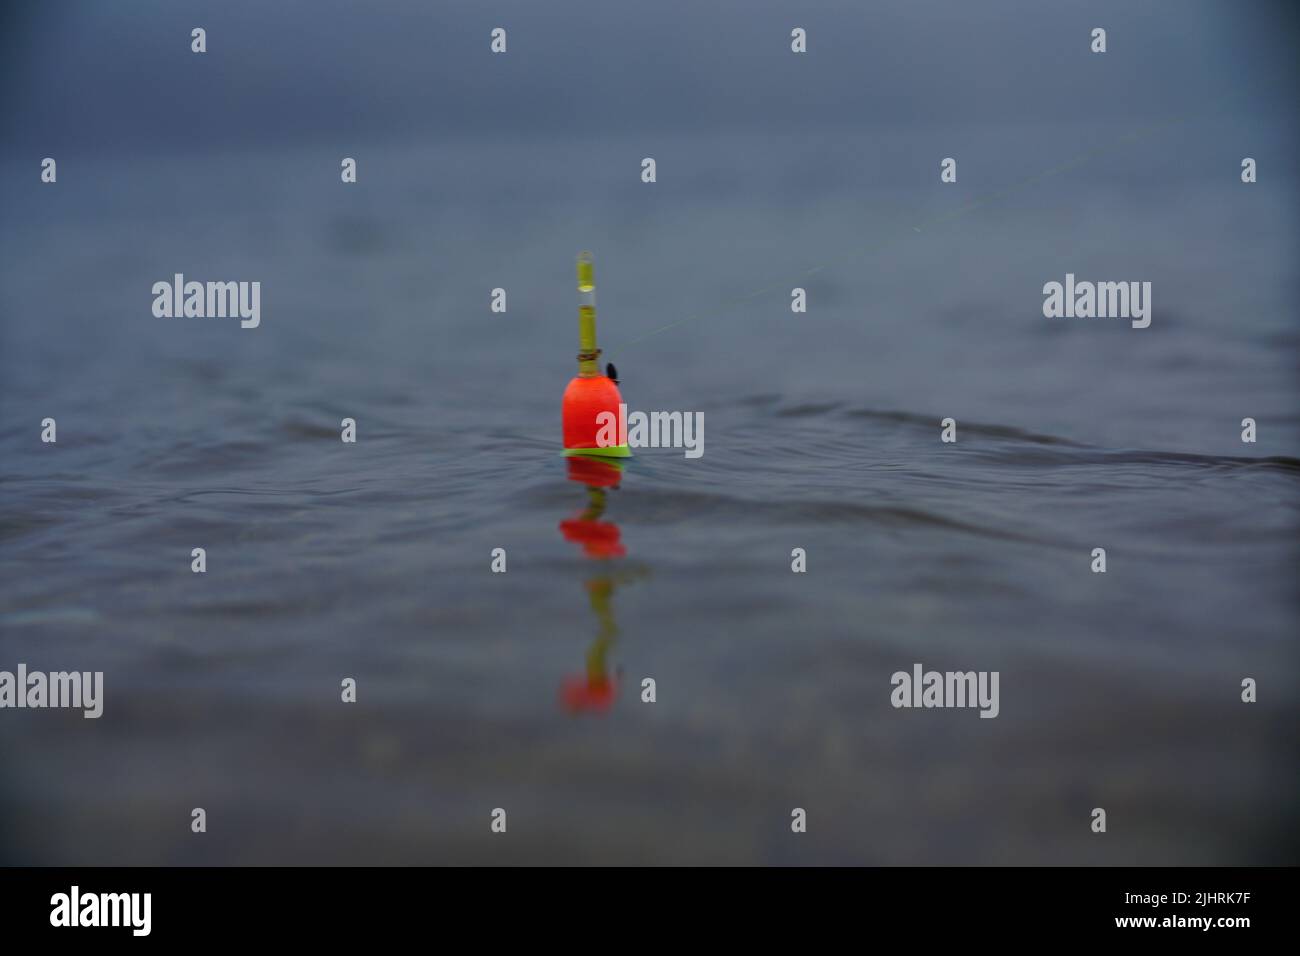 https://c8.alamy.com/comp/2JHRK7F/an-orange-and-green-fishing-bobber-floating-in-the-water-2JHRK7F.jpg